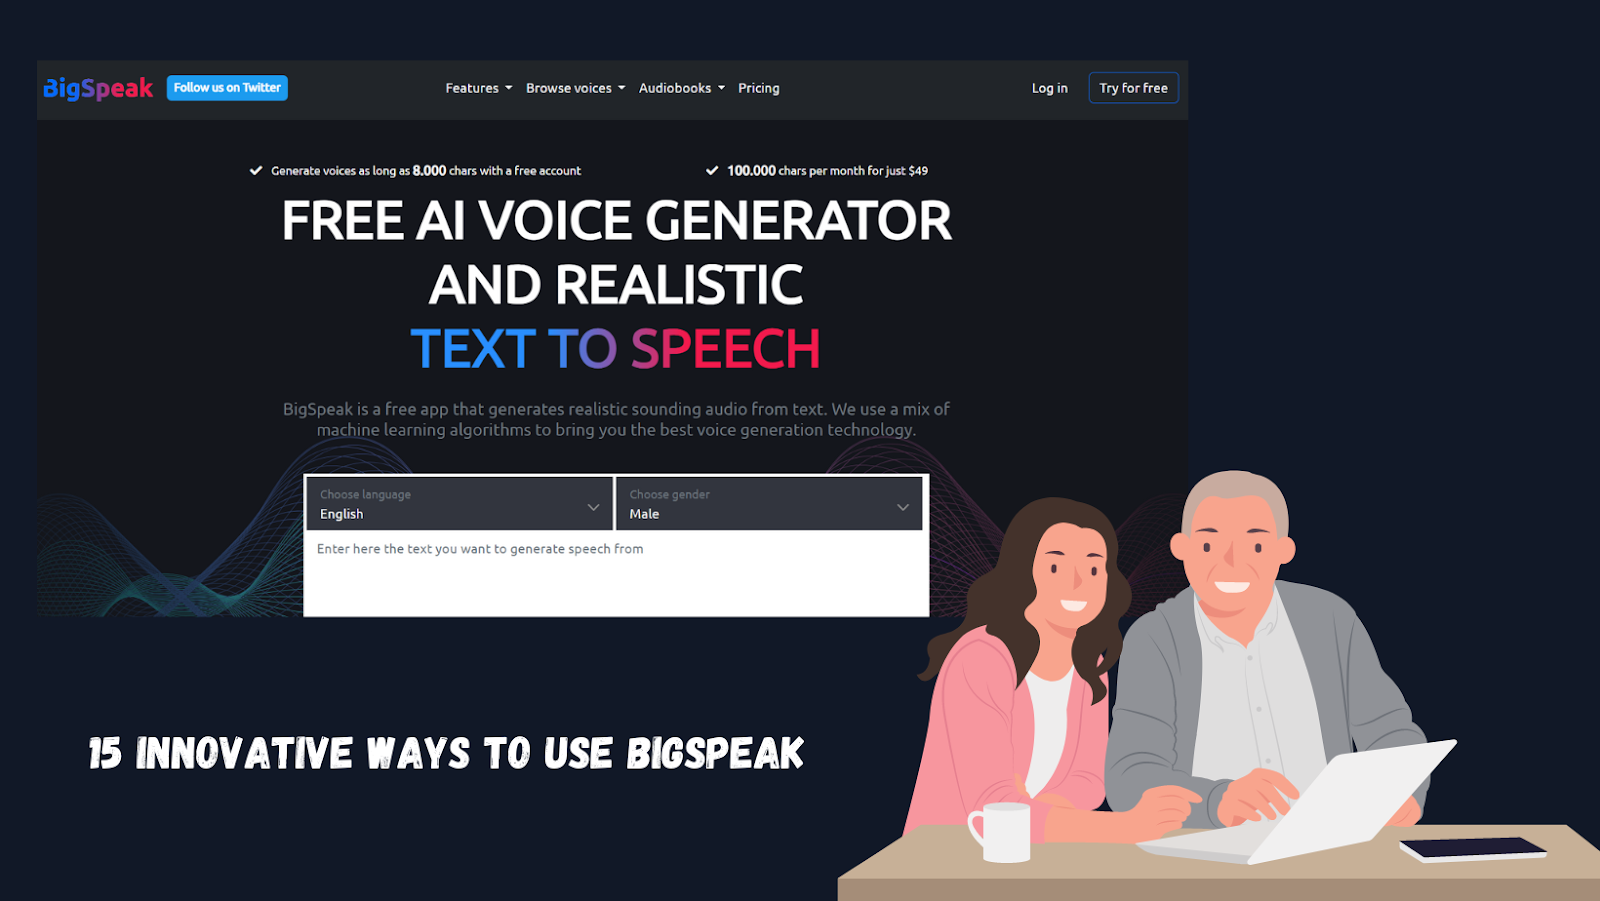 15 Innovative Ways to Use BigSpeak